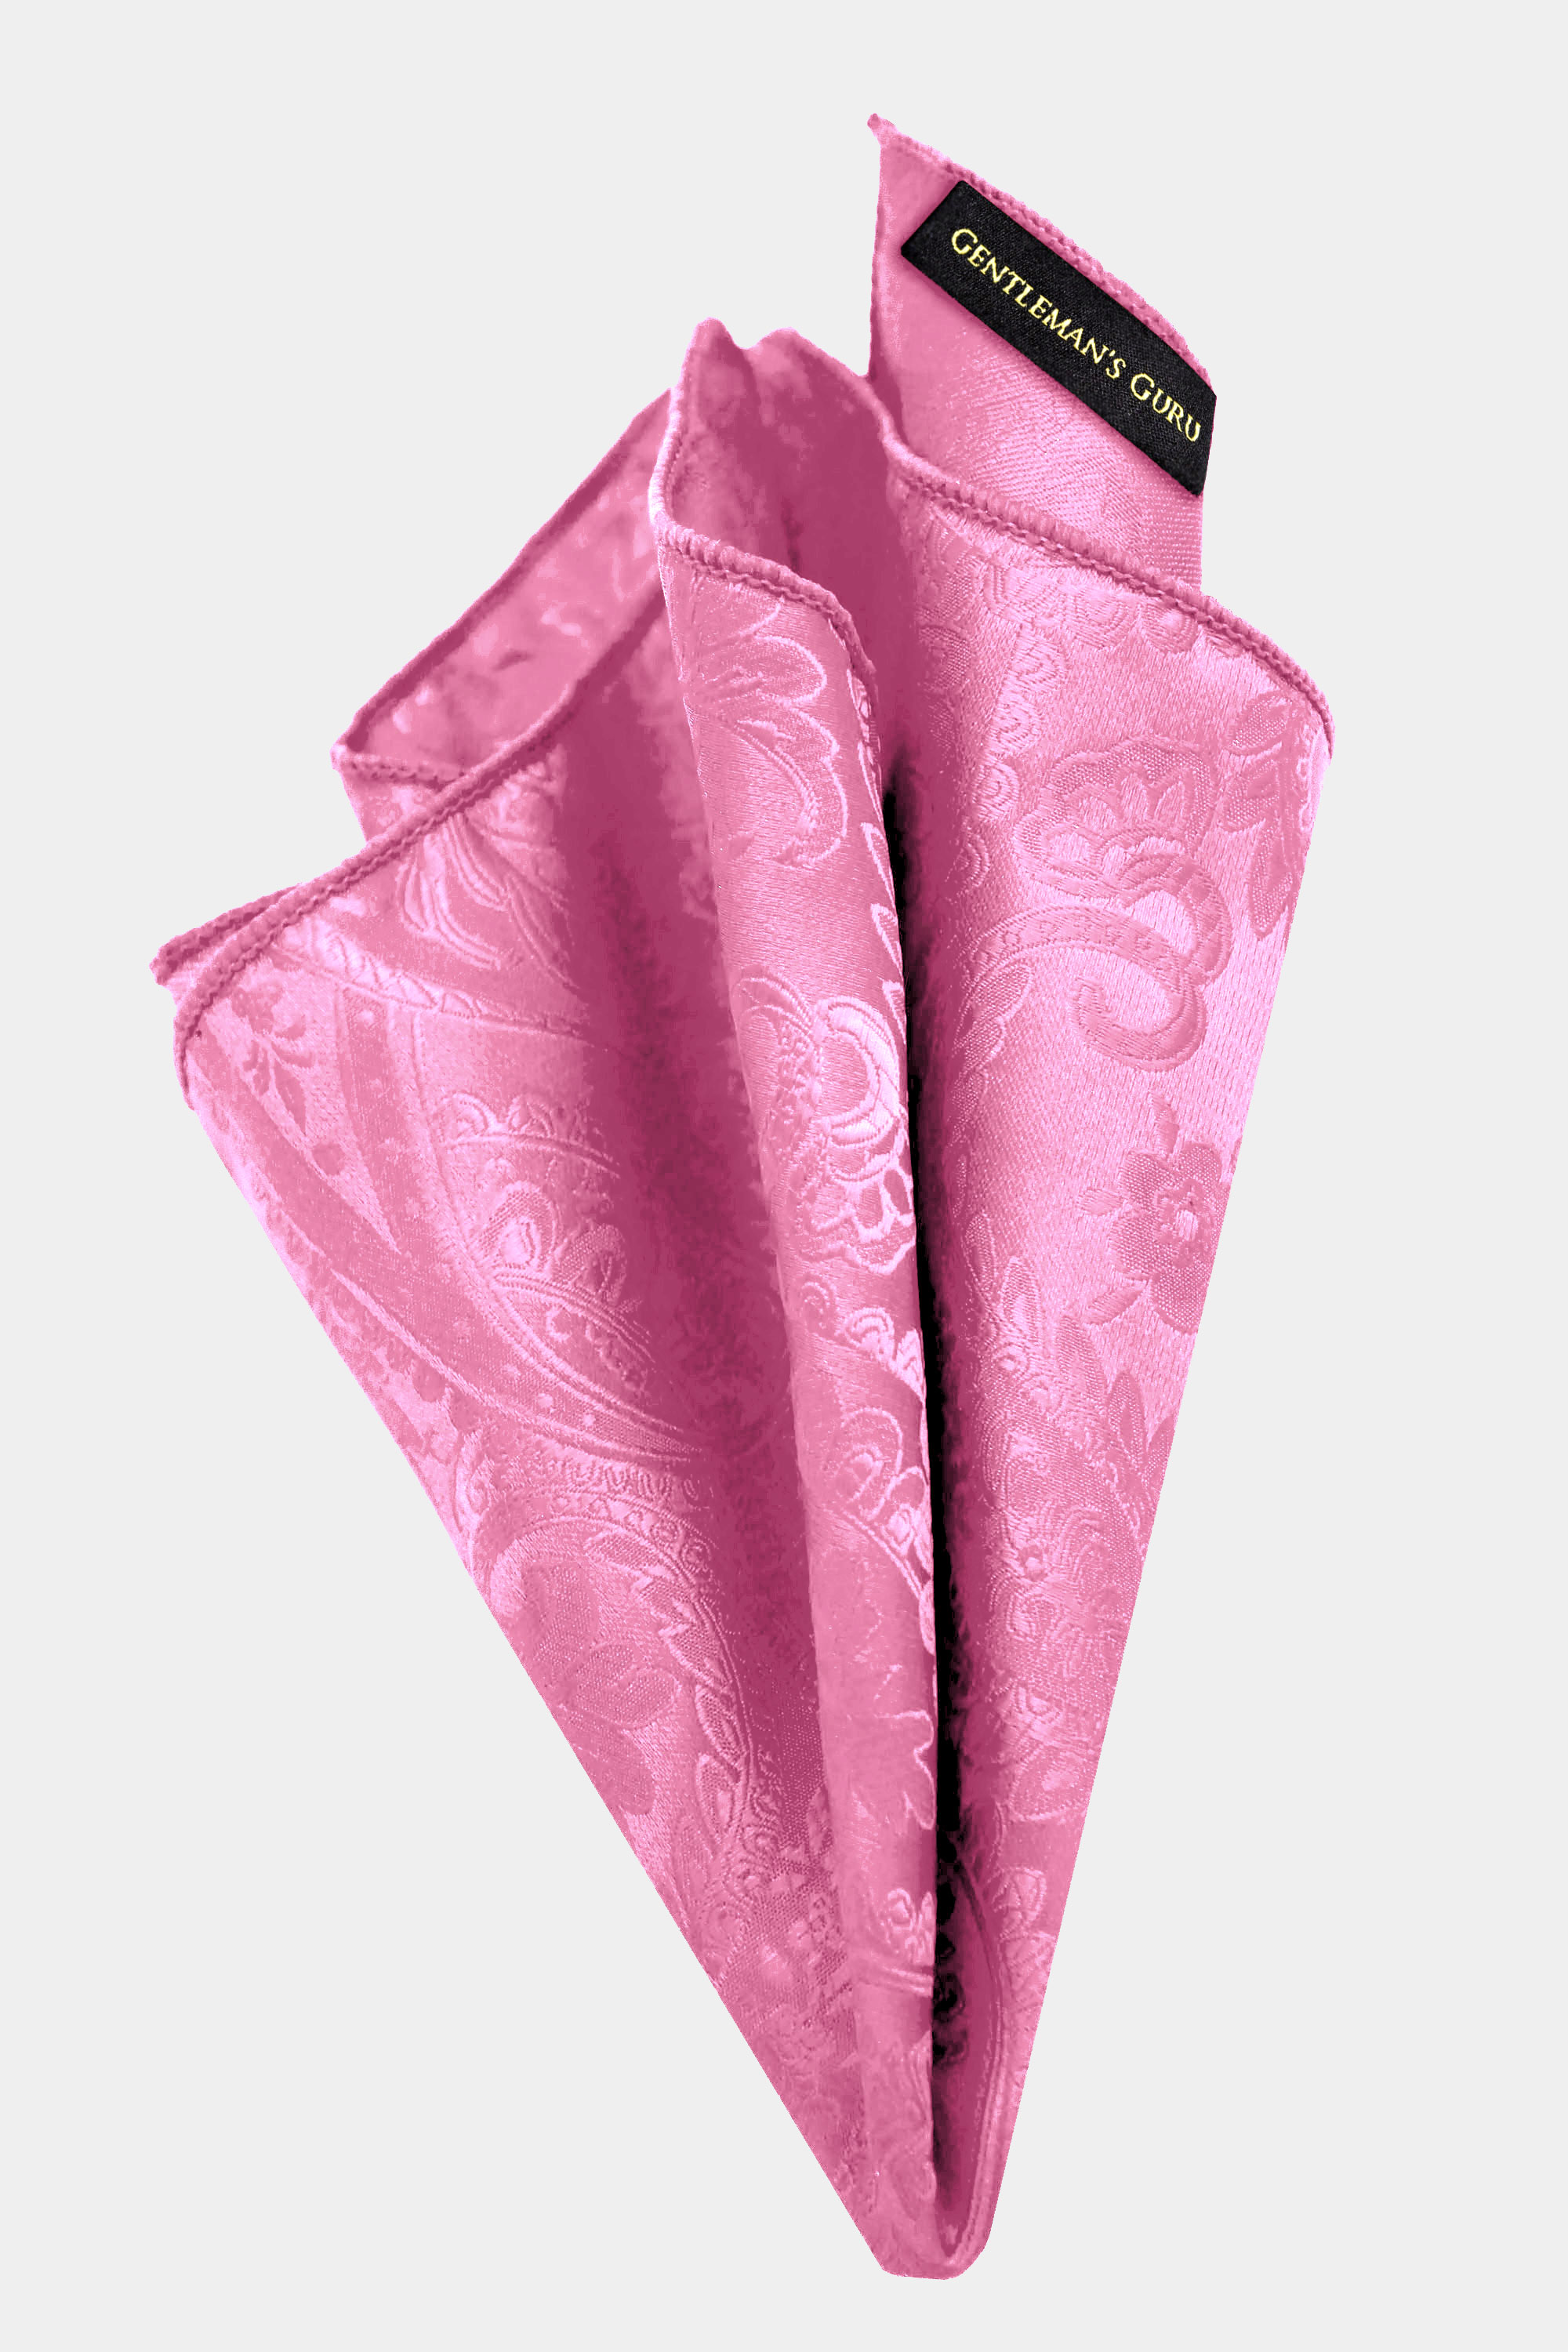 Light-Pink-Paisley-Pocket-Square-Handkerchief-from-Gentlemansguru.com